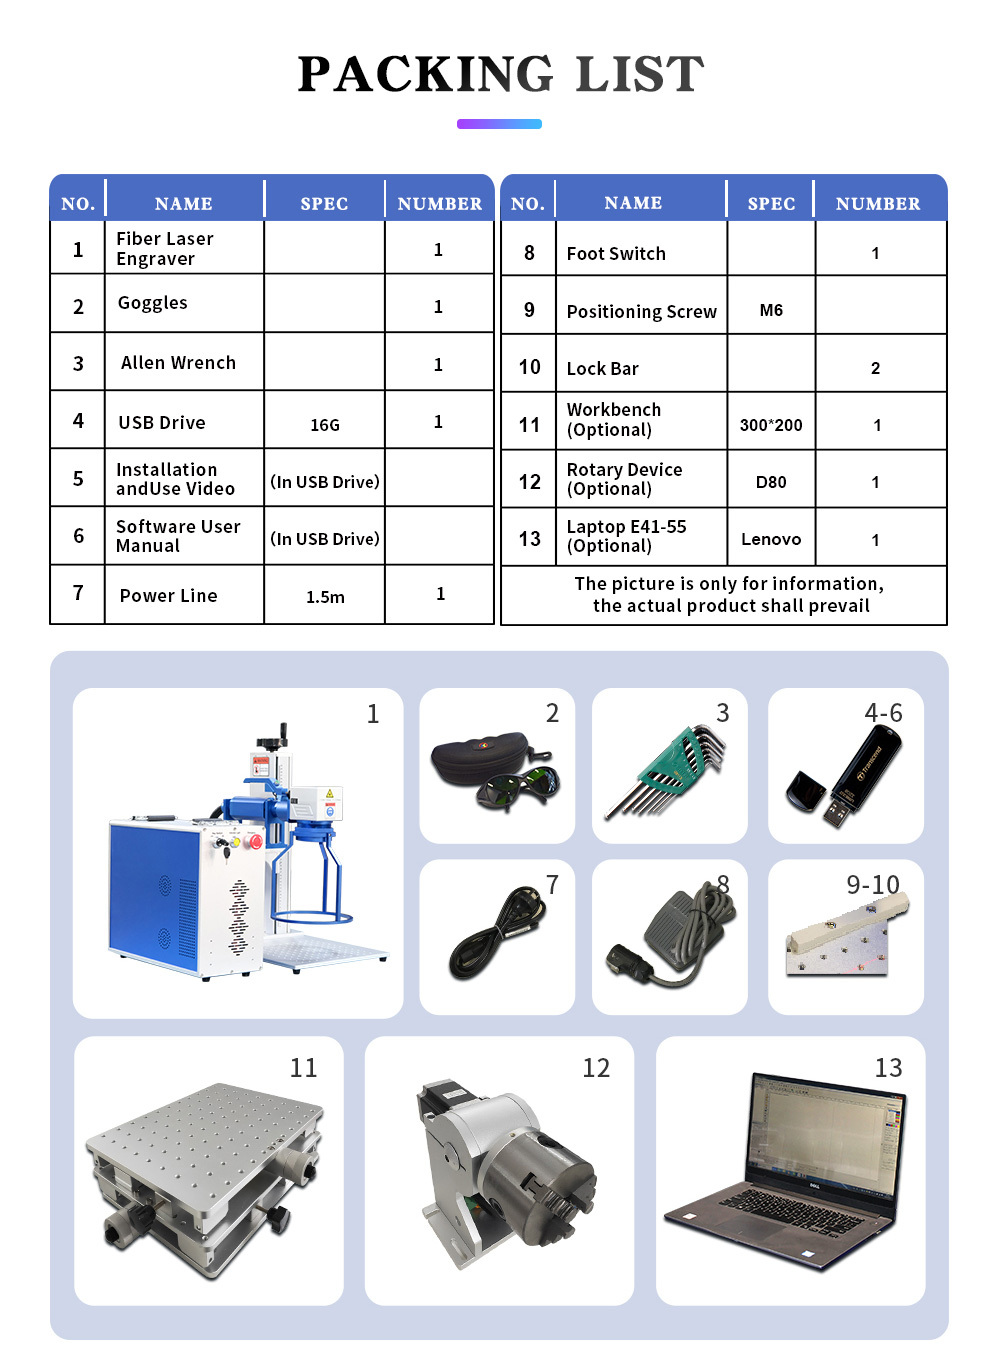 Laser engraving system - Laser marking, welding and cutting machine